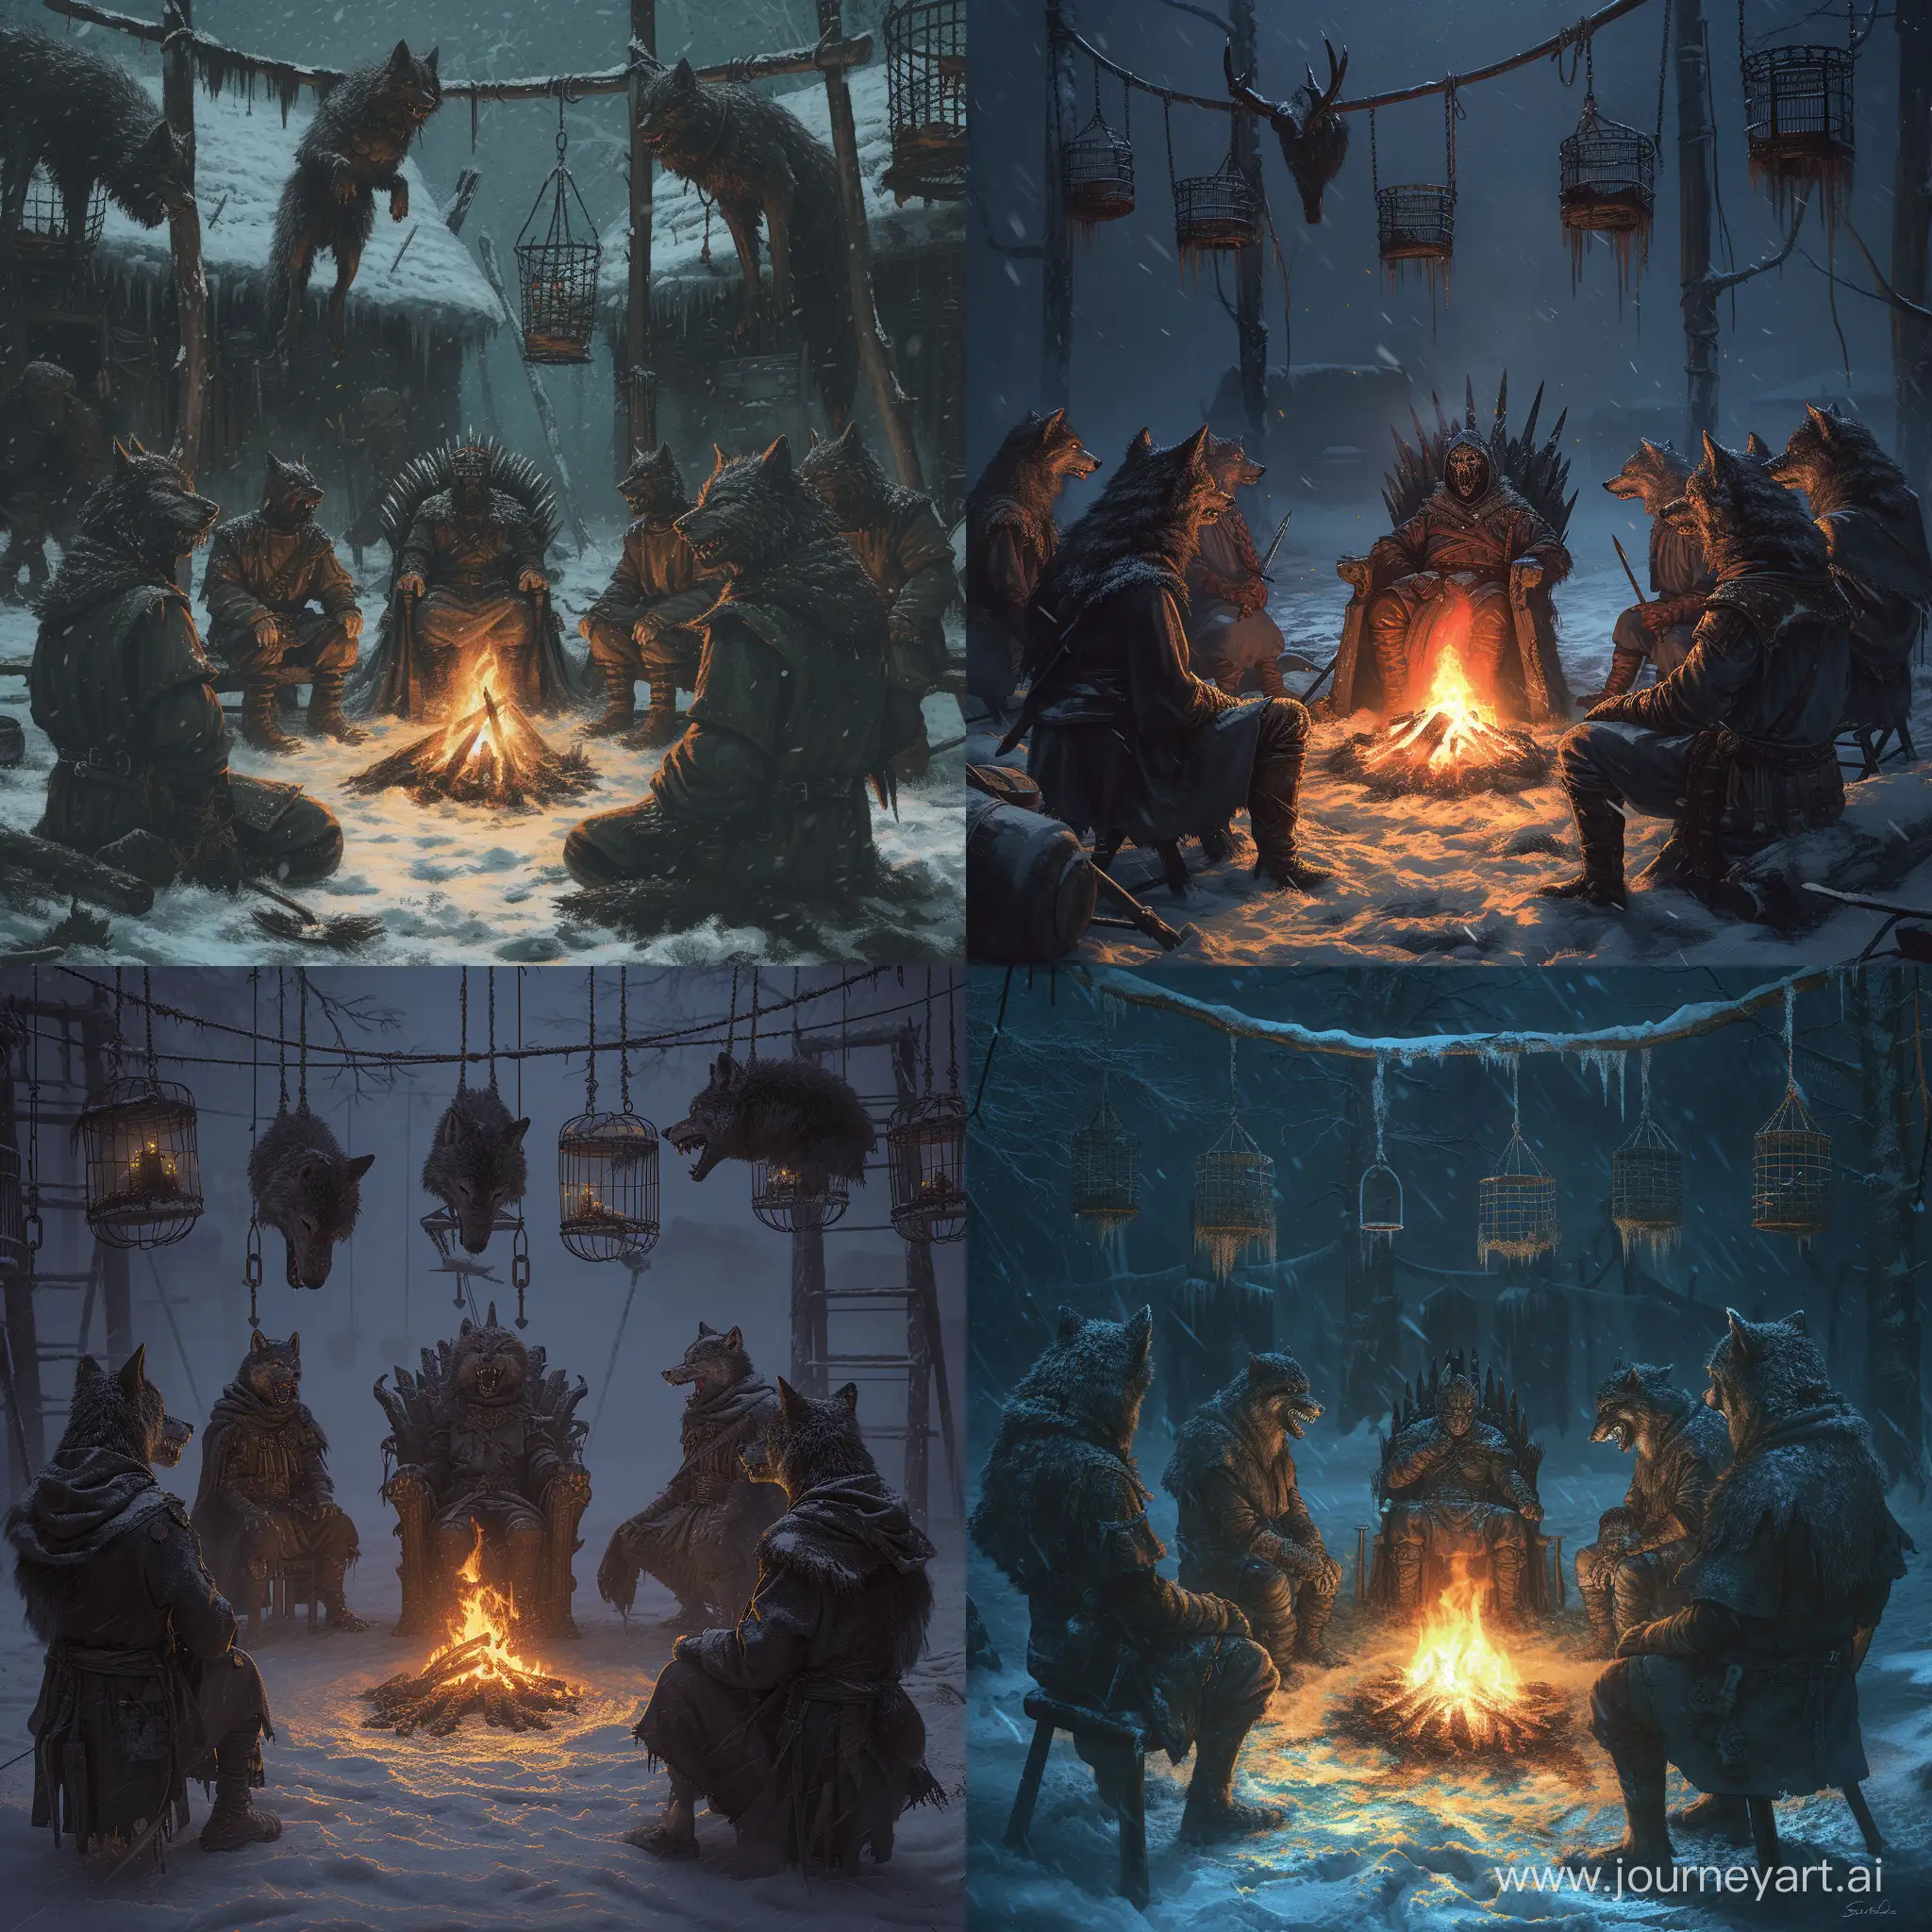 Ferocious-Wolf-Warriors-Circle-Fire-in-Snowy-Horror-Camp